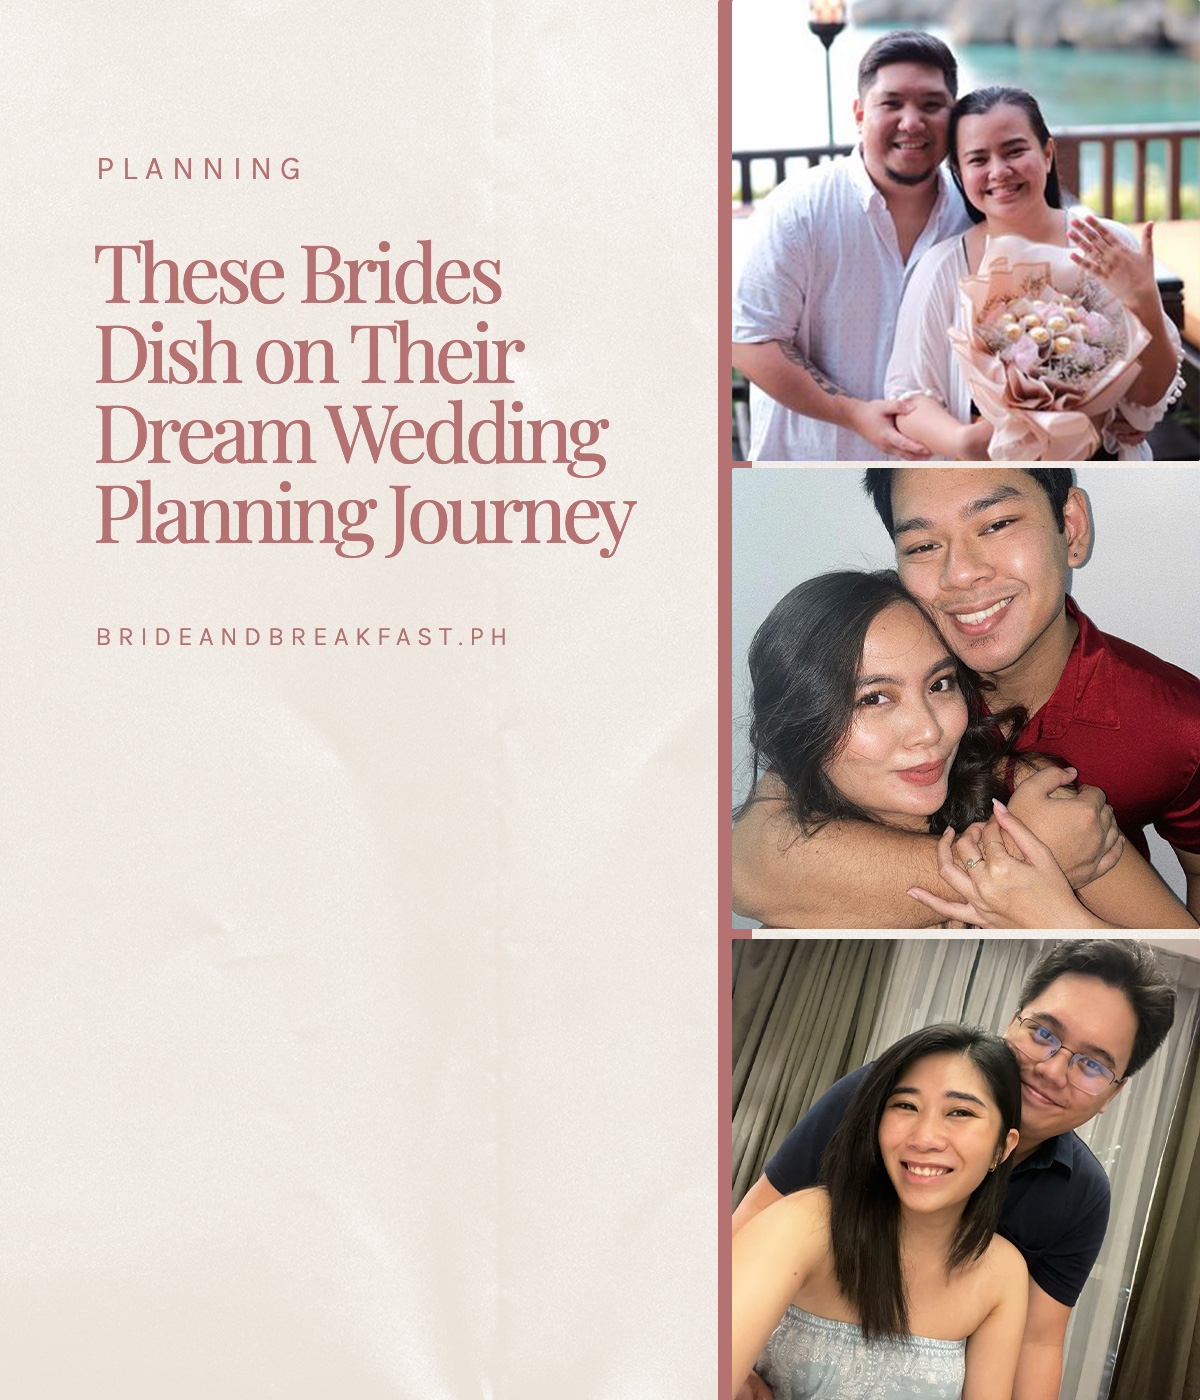 These Brides Dish on Their Dream Wedding Planning Journey